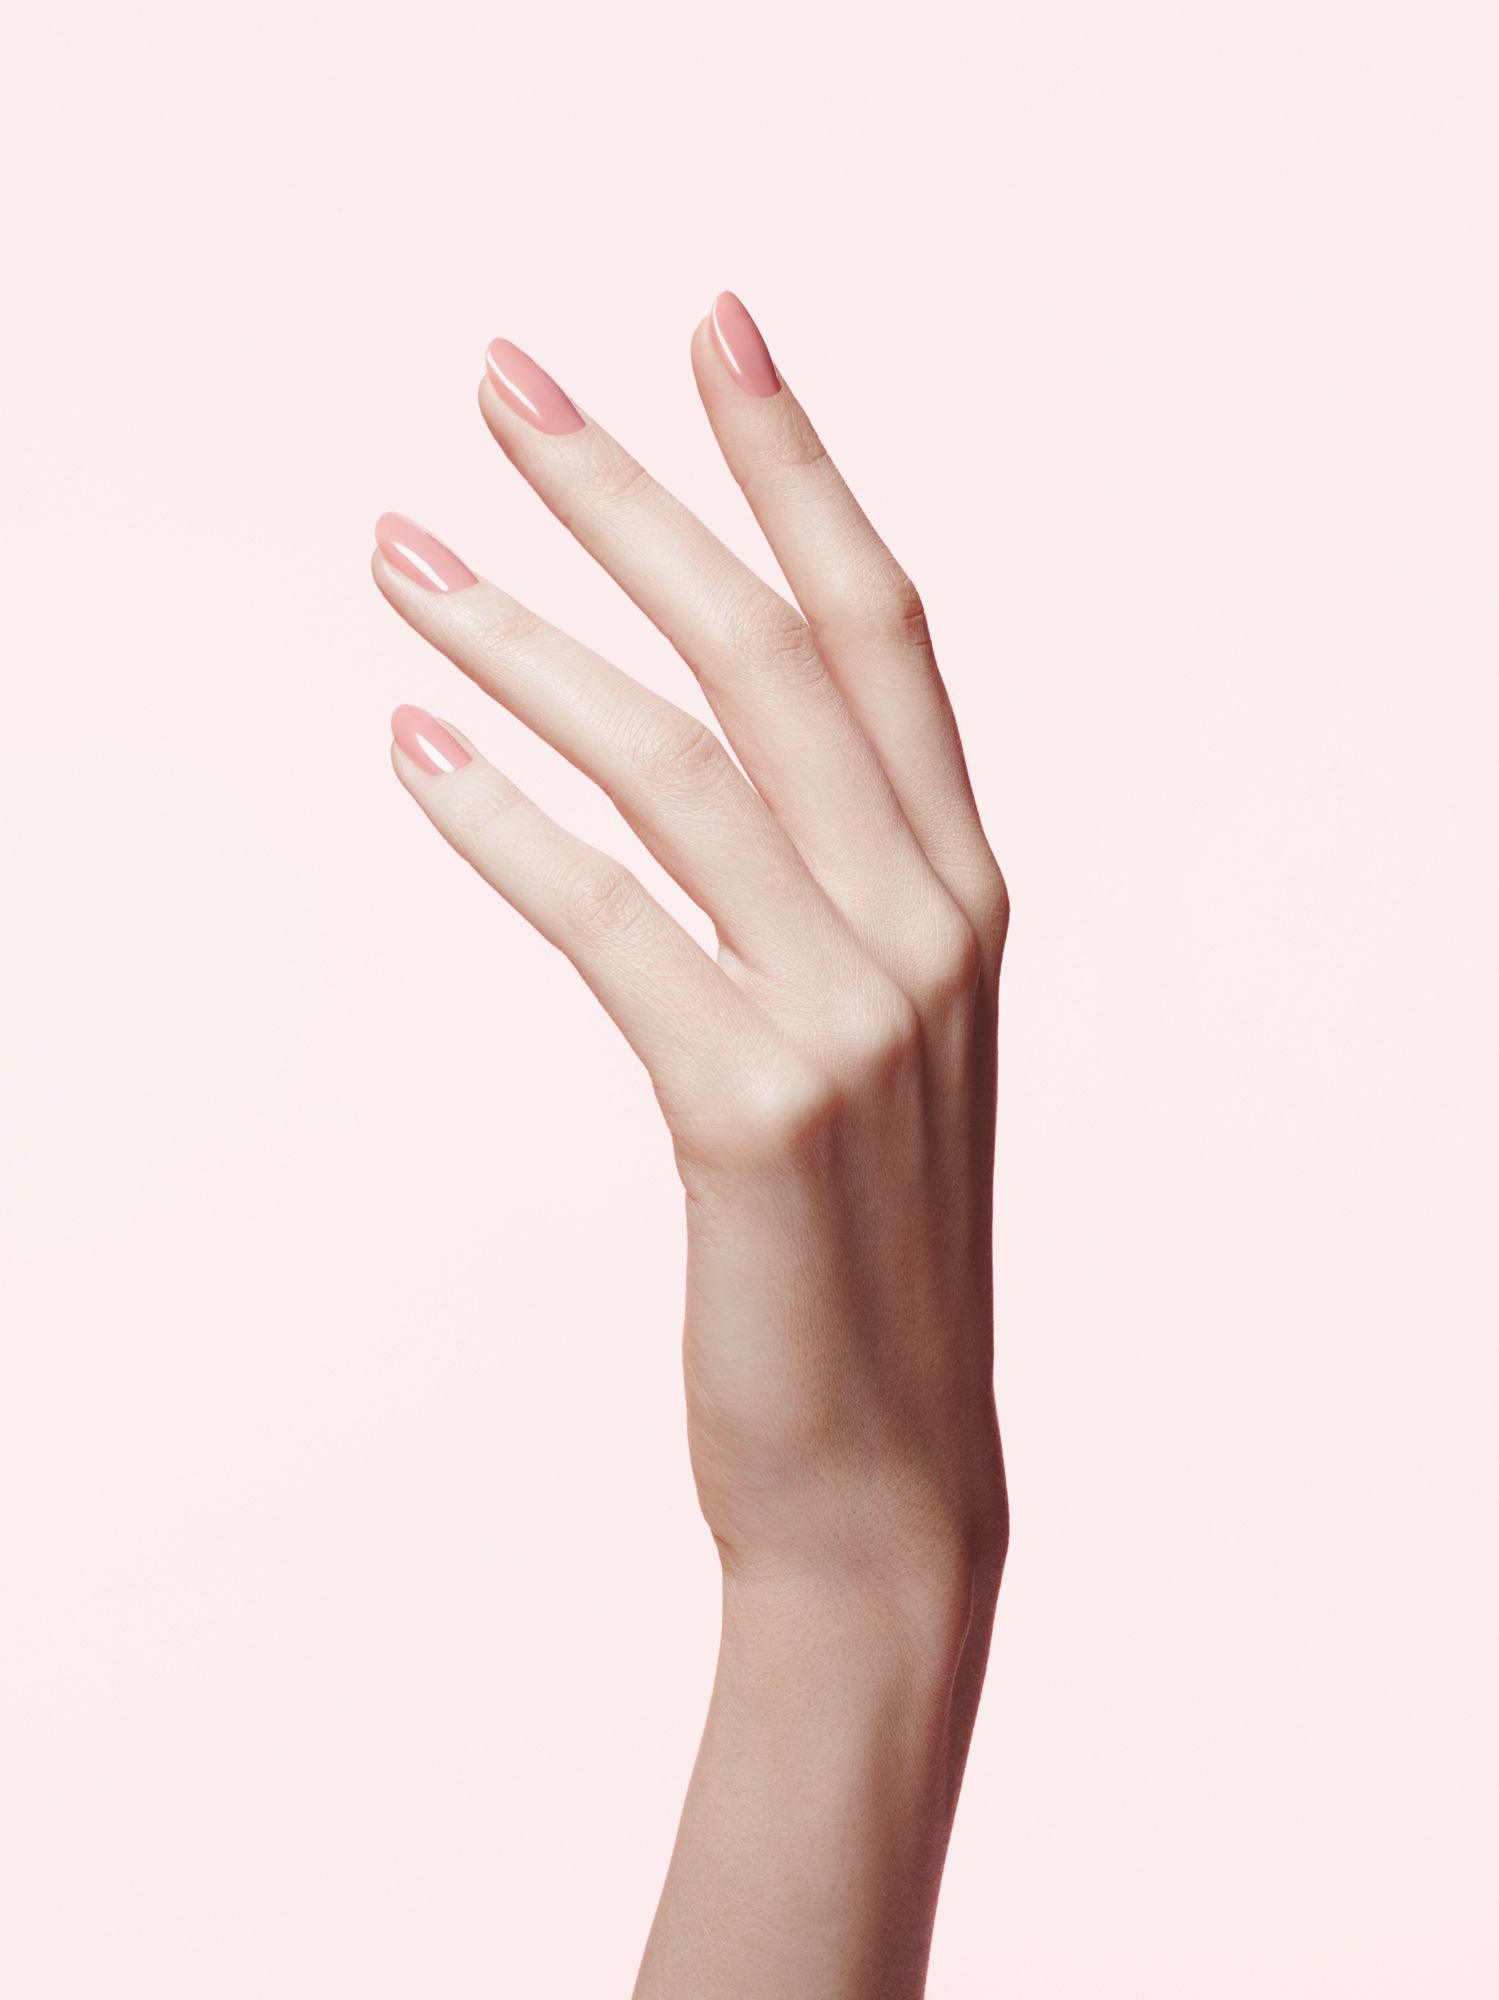 Hånd med lyserød gelmanicure